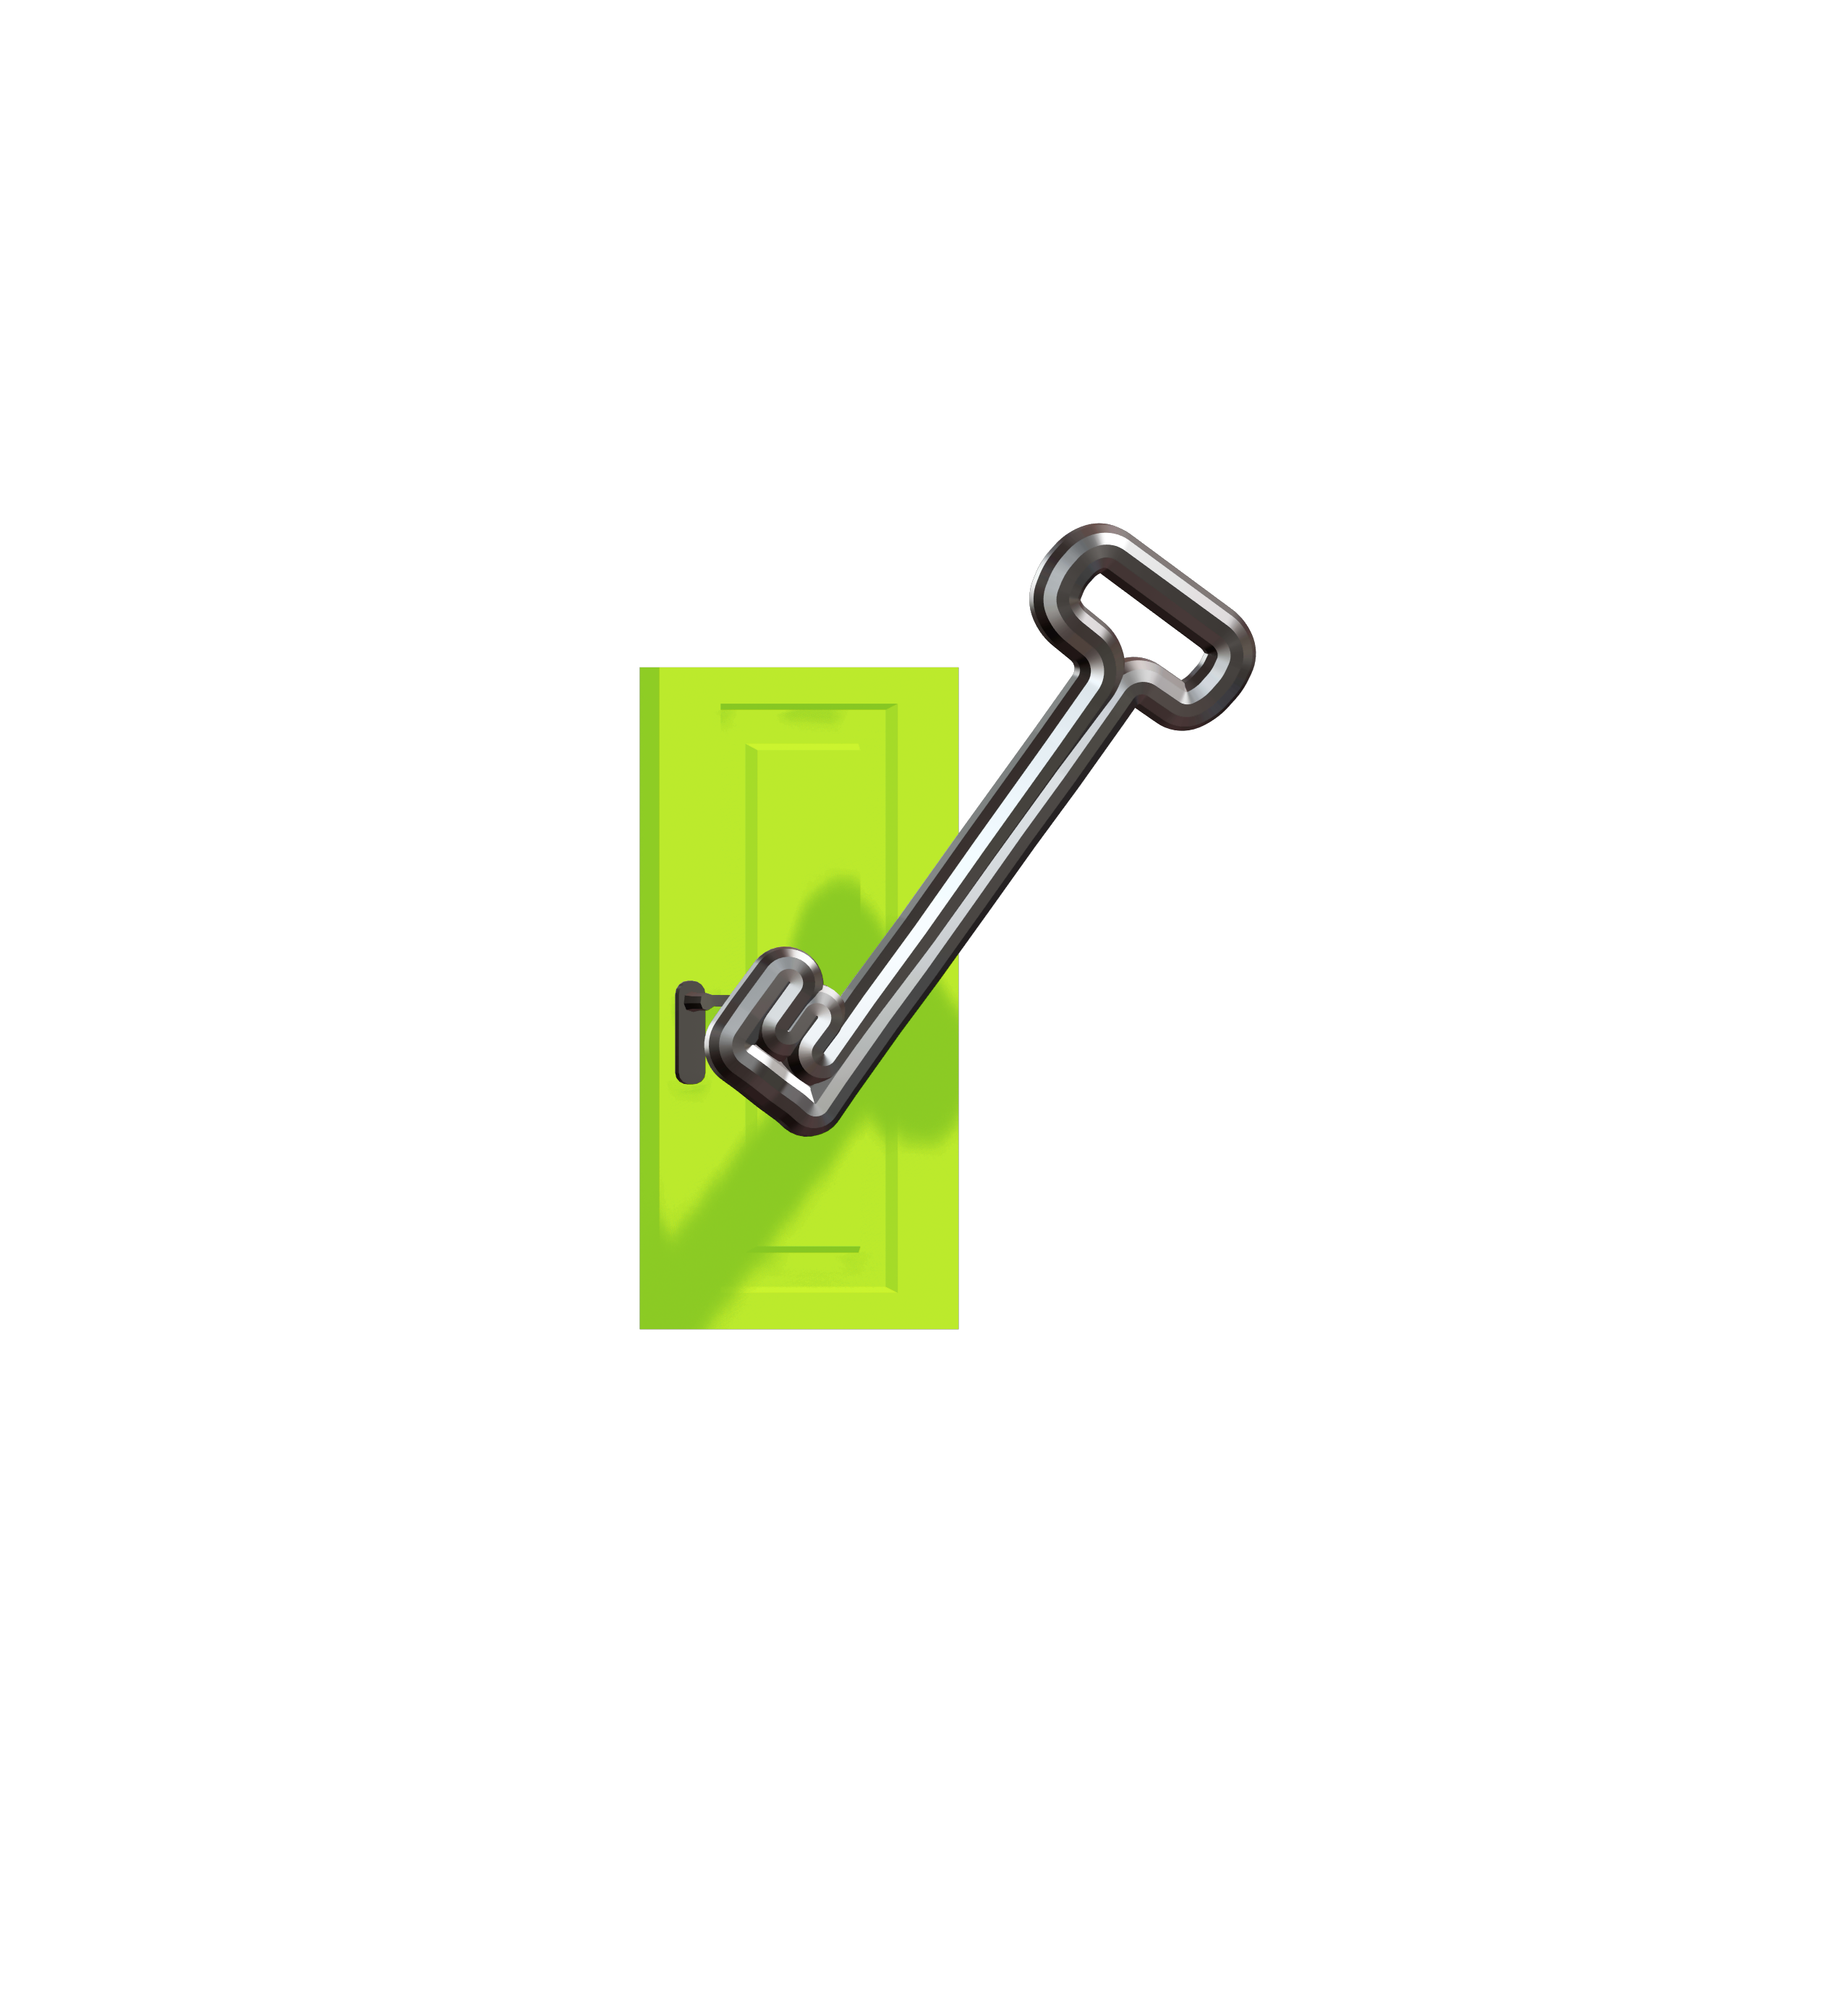 NaydIT Green Door with Metal Key